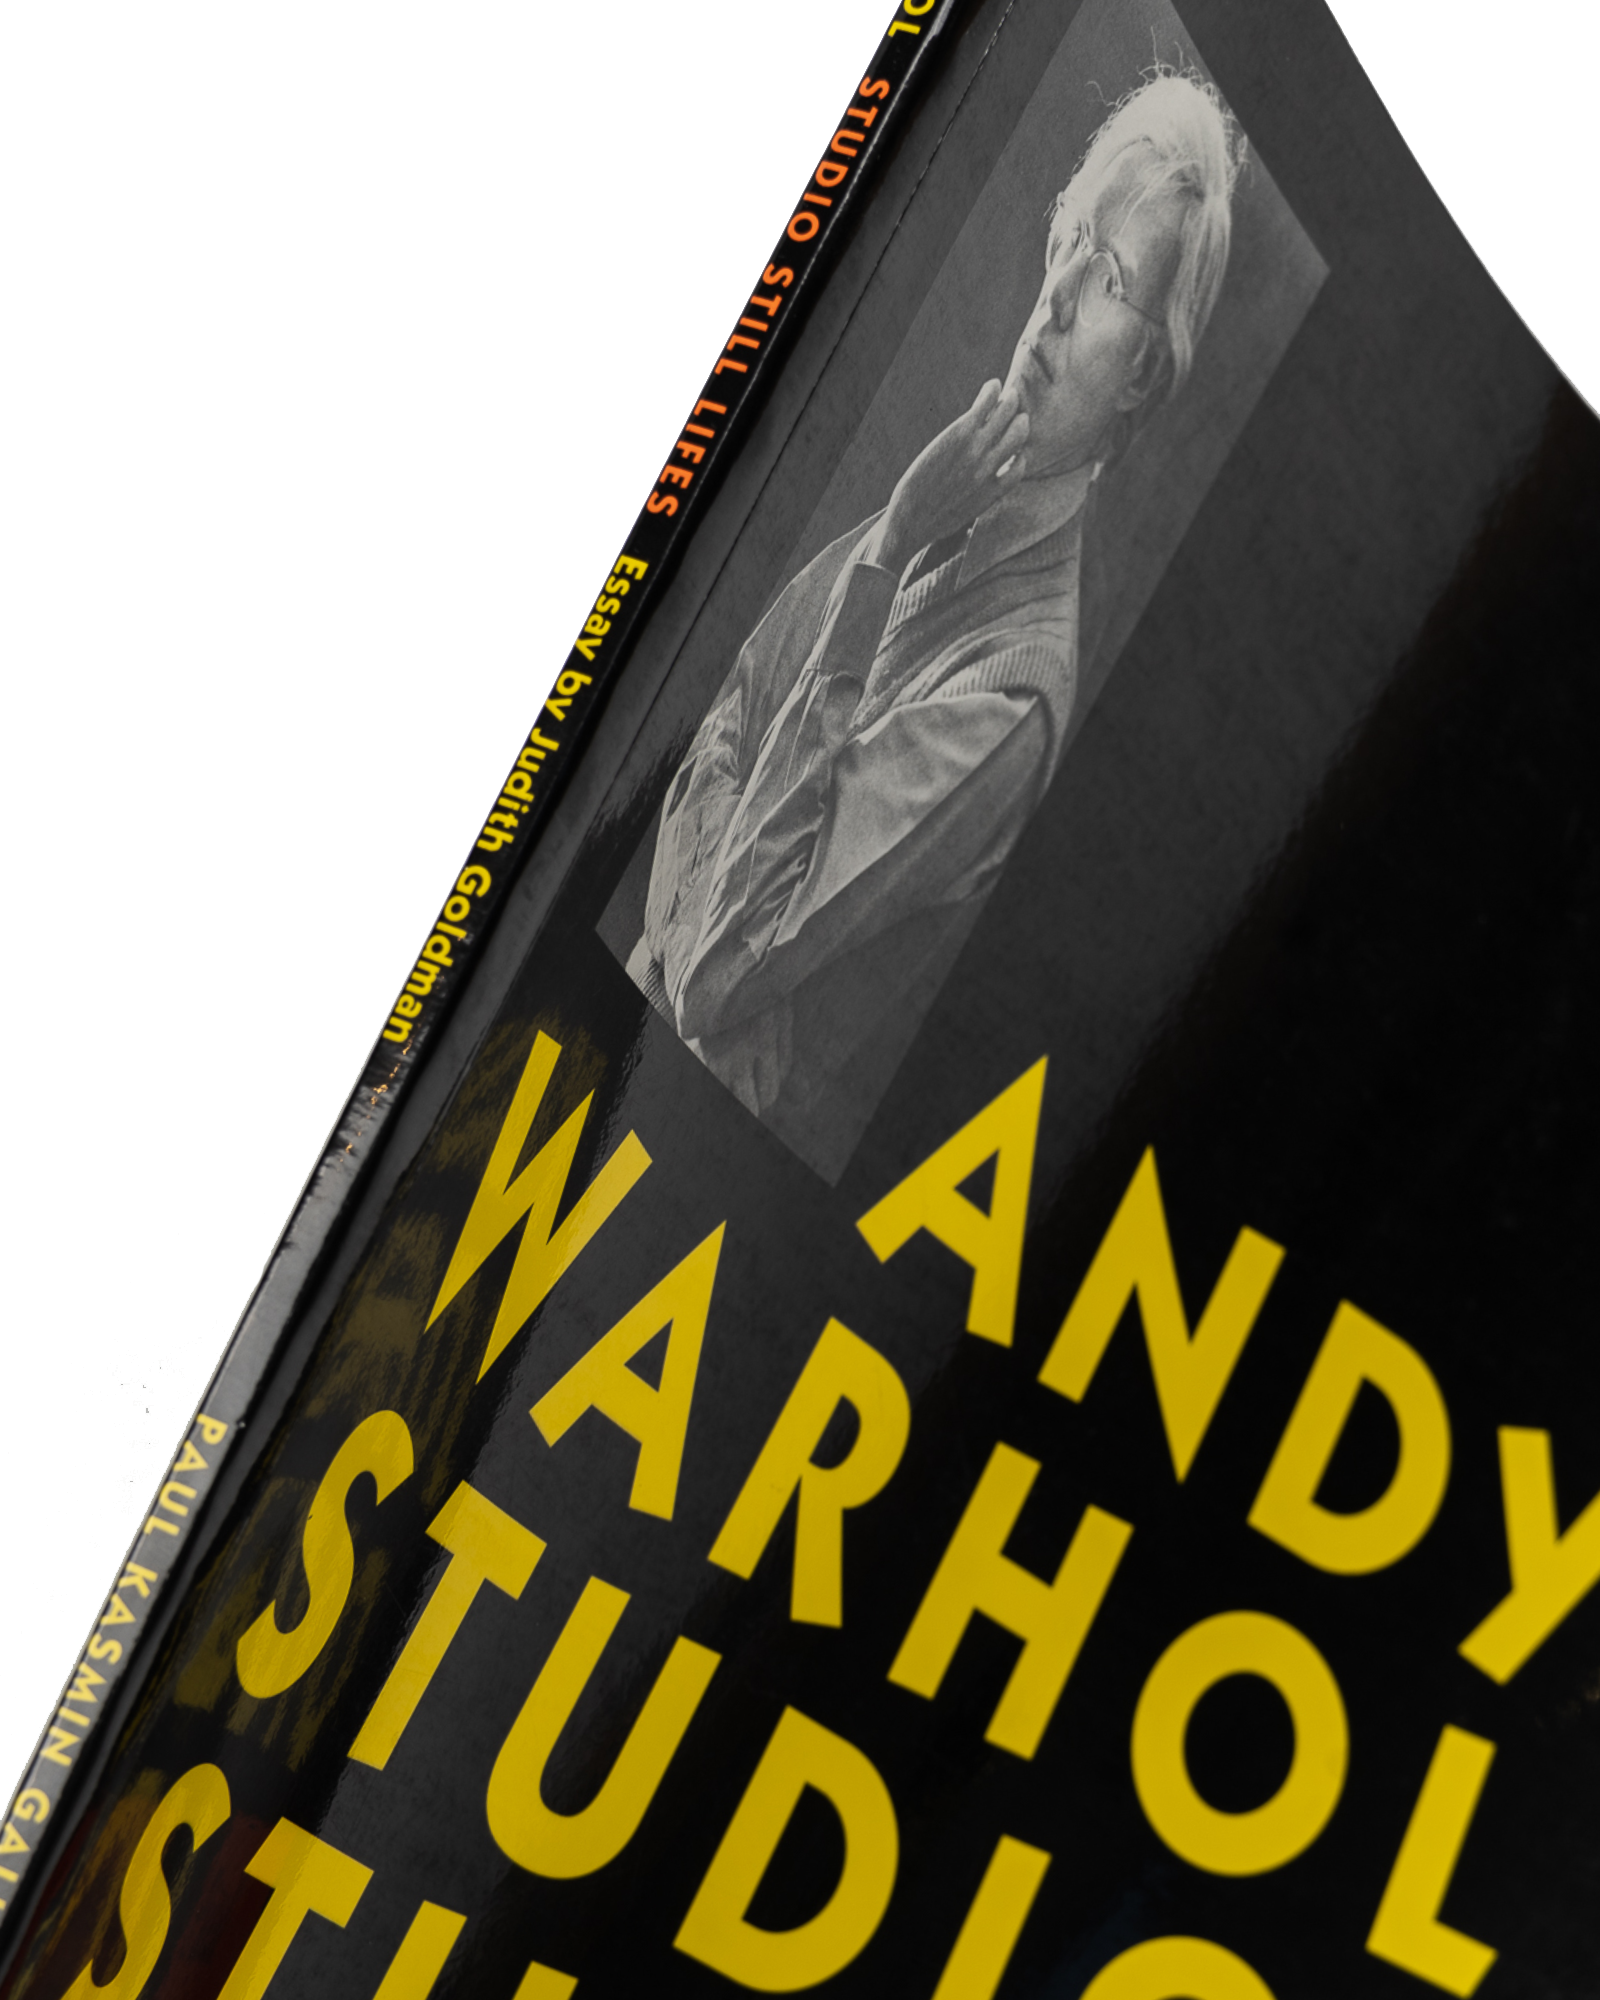 Classic Paris - Book - Andy Warhol - Studio Still Lifes